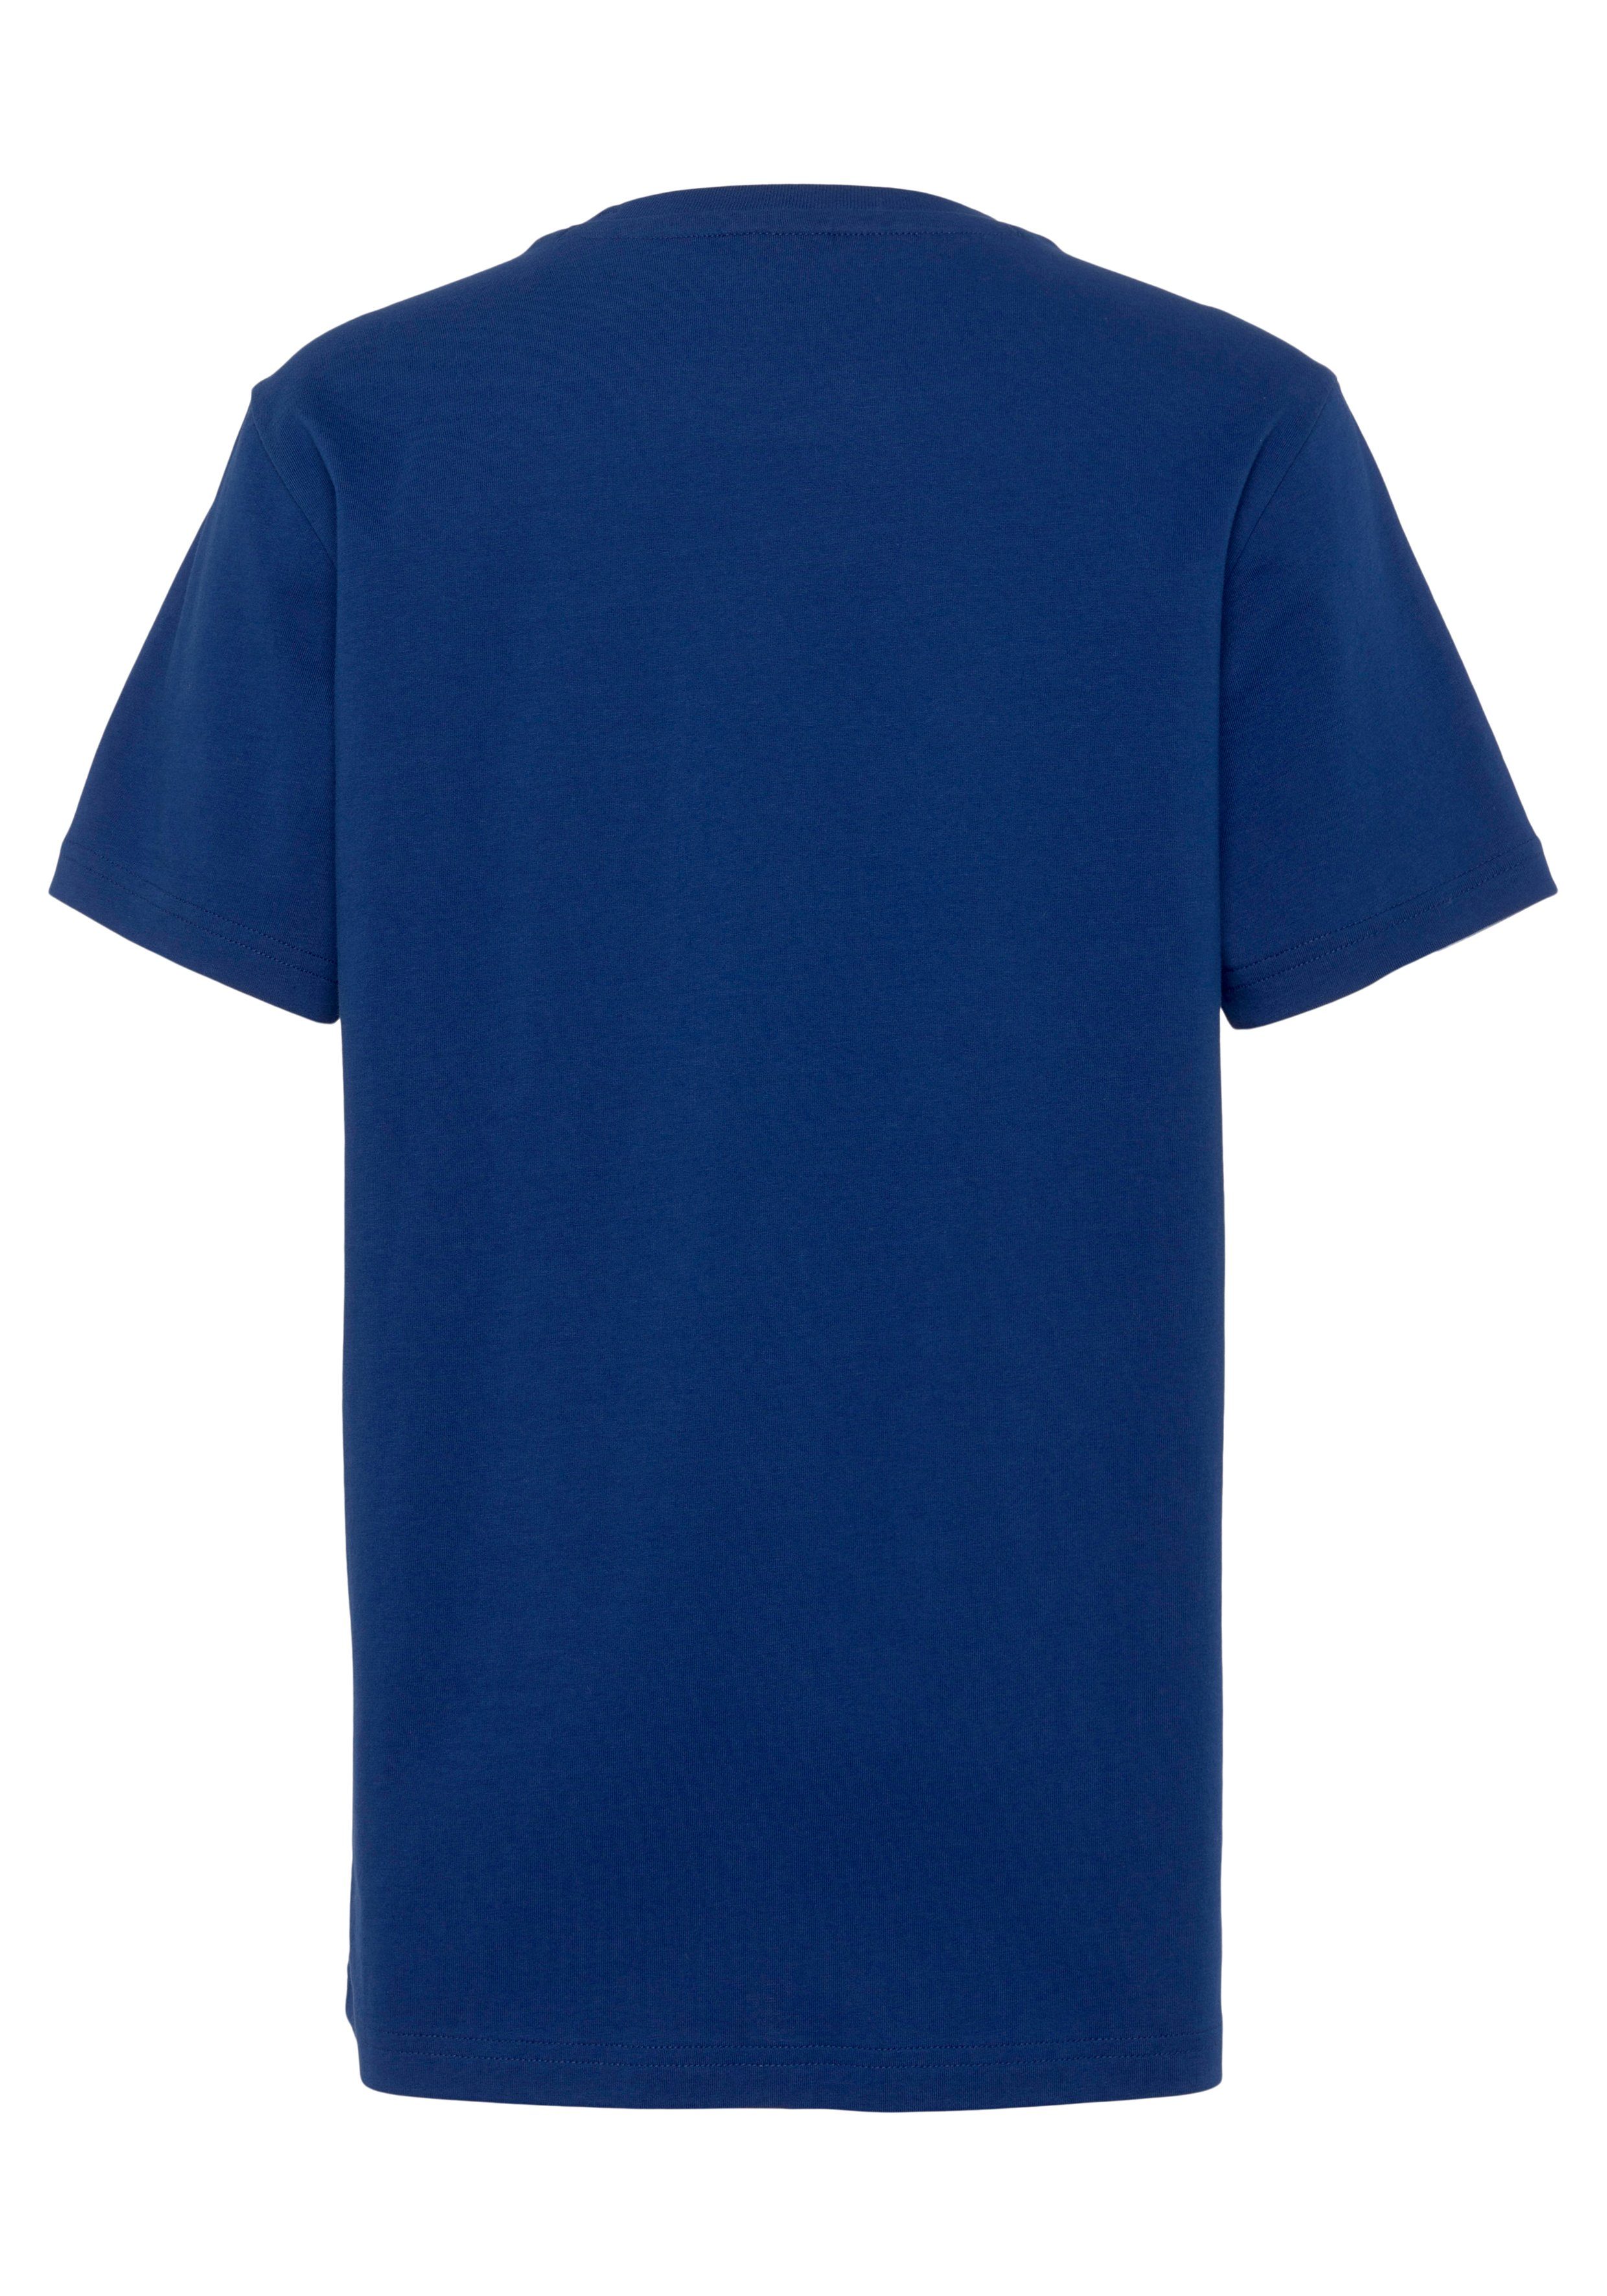 Kinder Crewneck Shop blau - Graphic T-Shirt für T-Shirt Champion